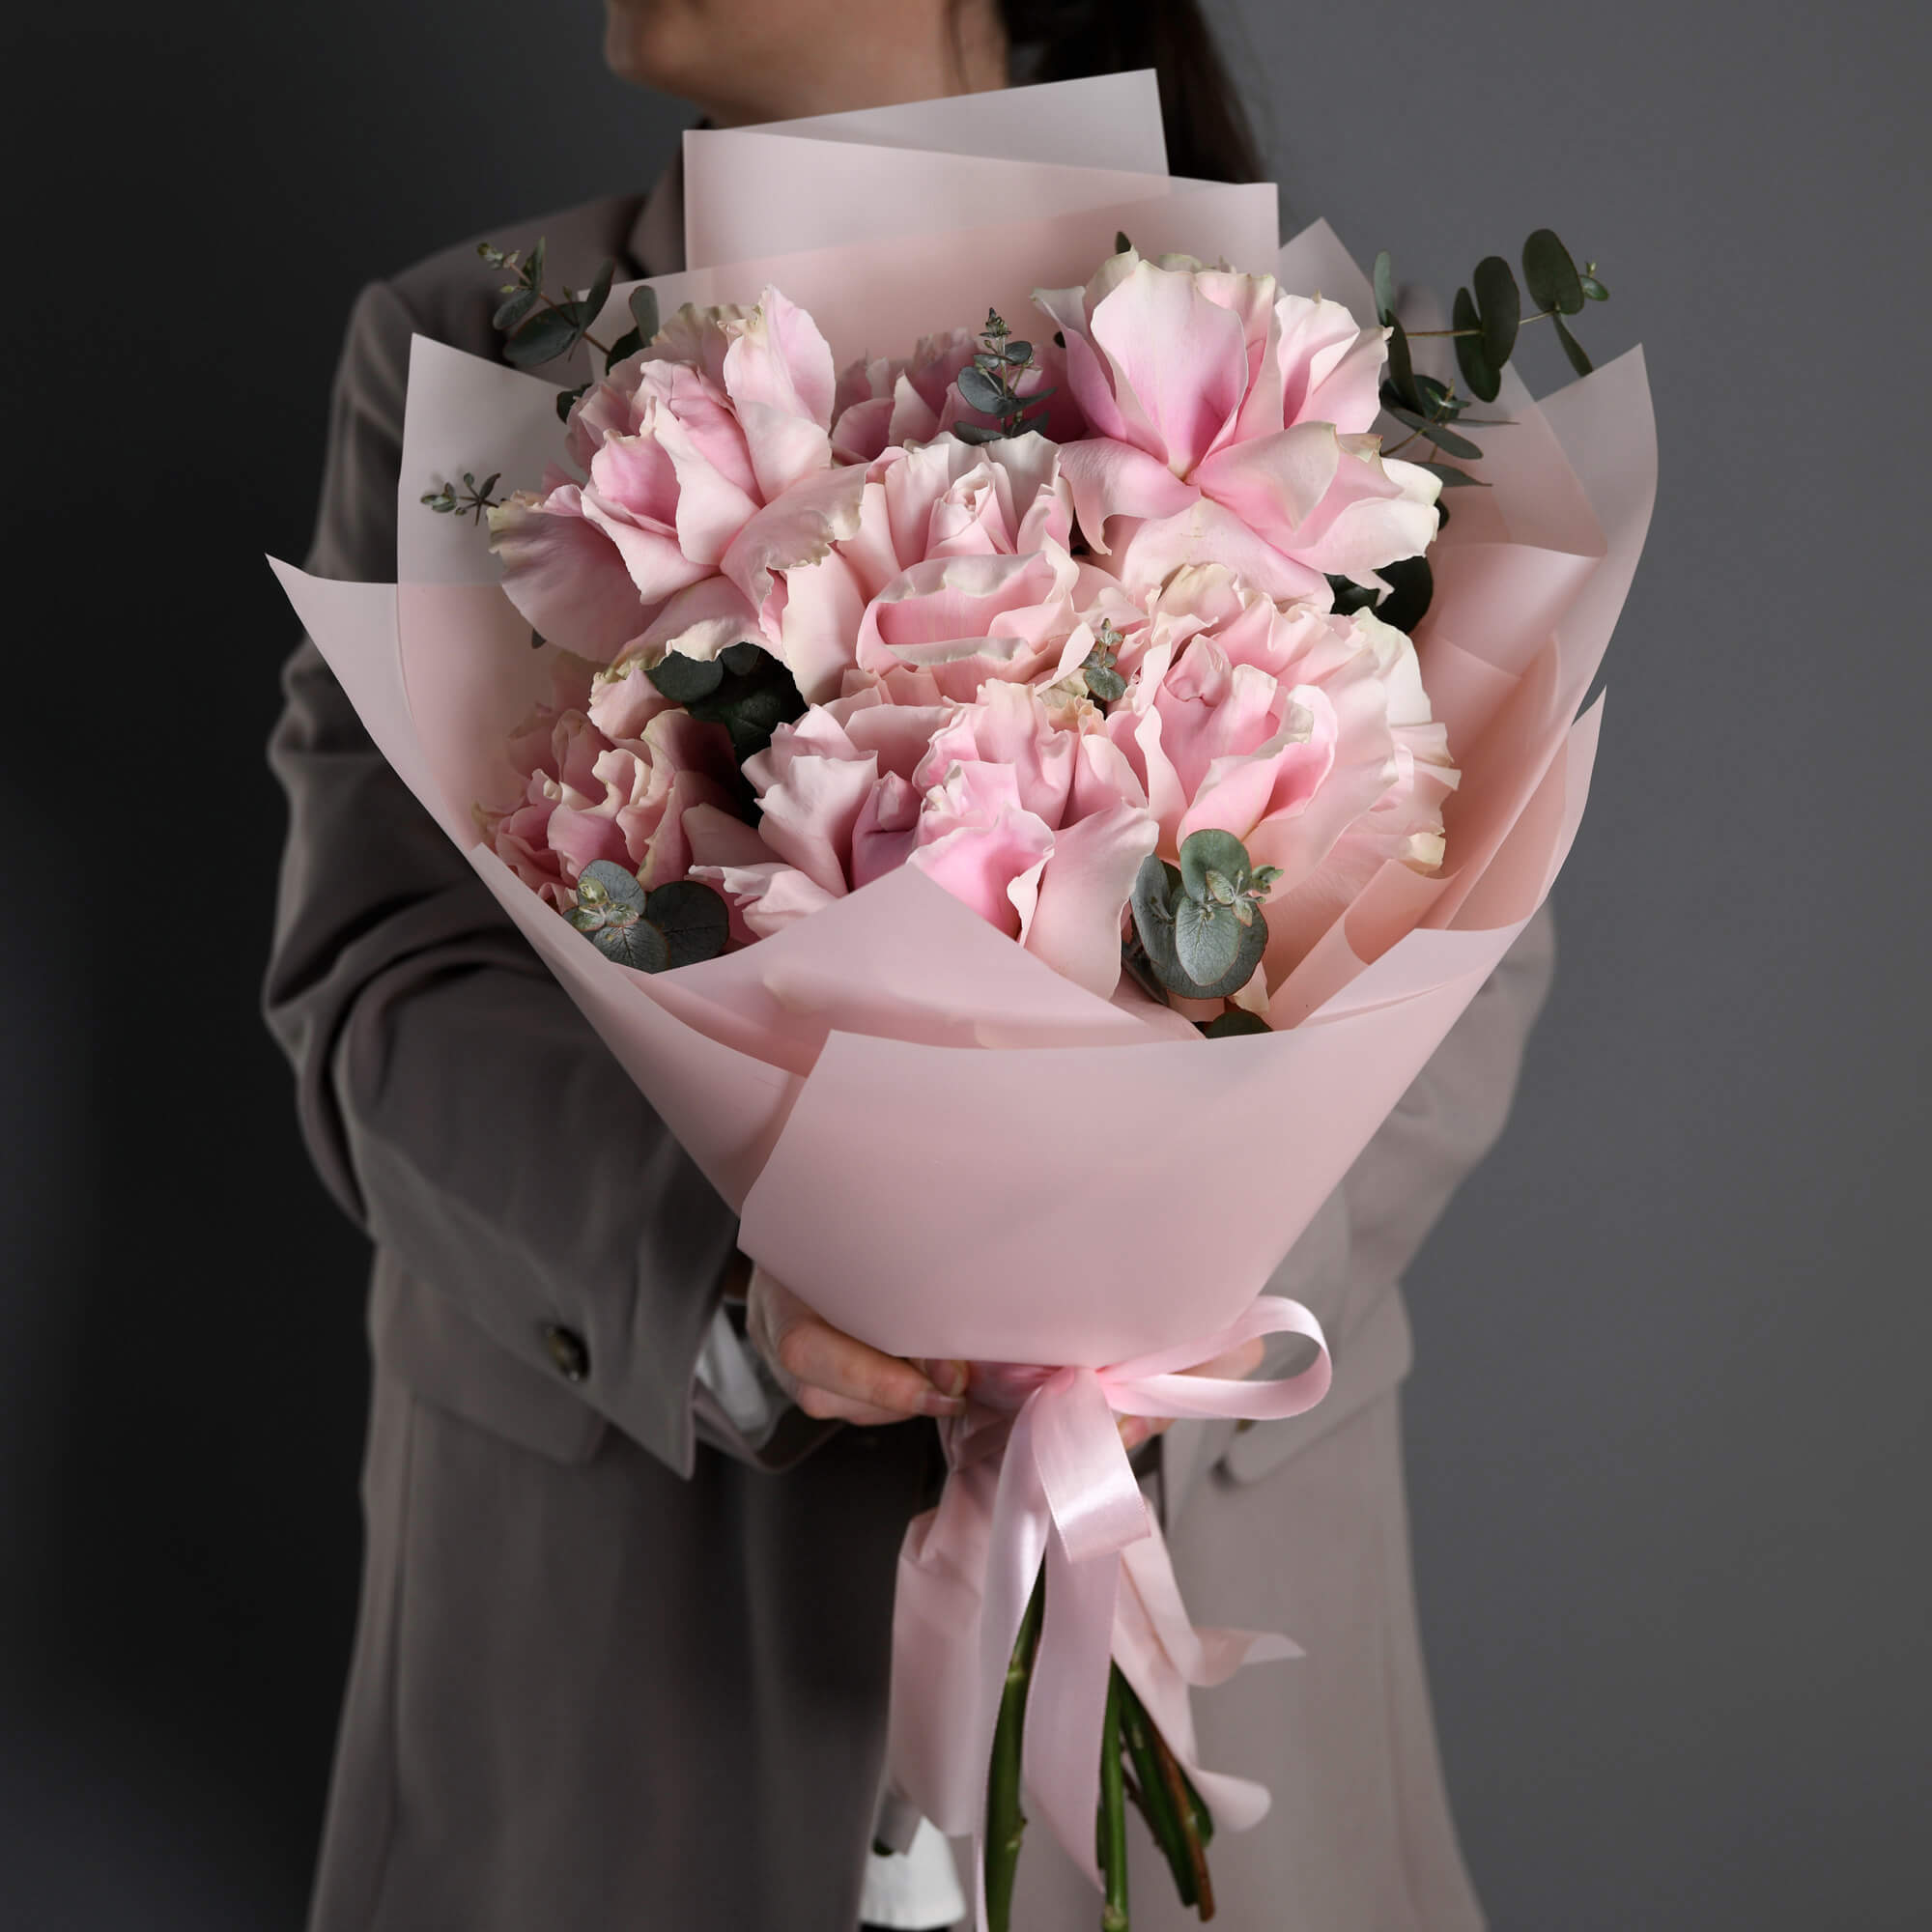 Buchet cu 7 trandafiri roz speciali si eucalipt, 2